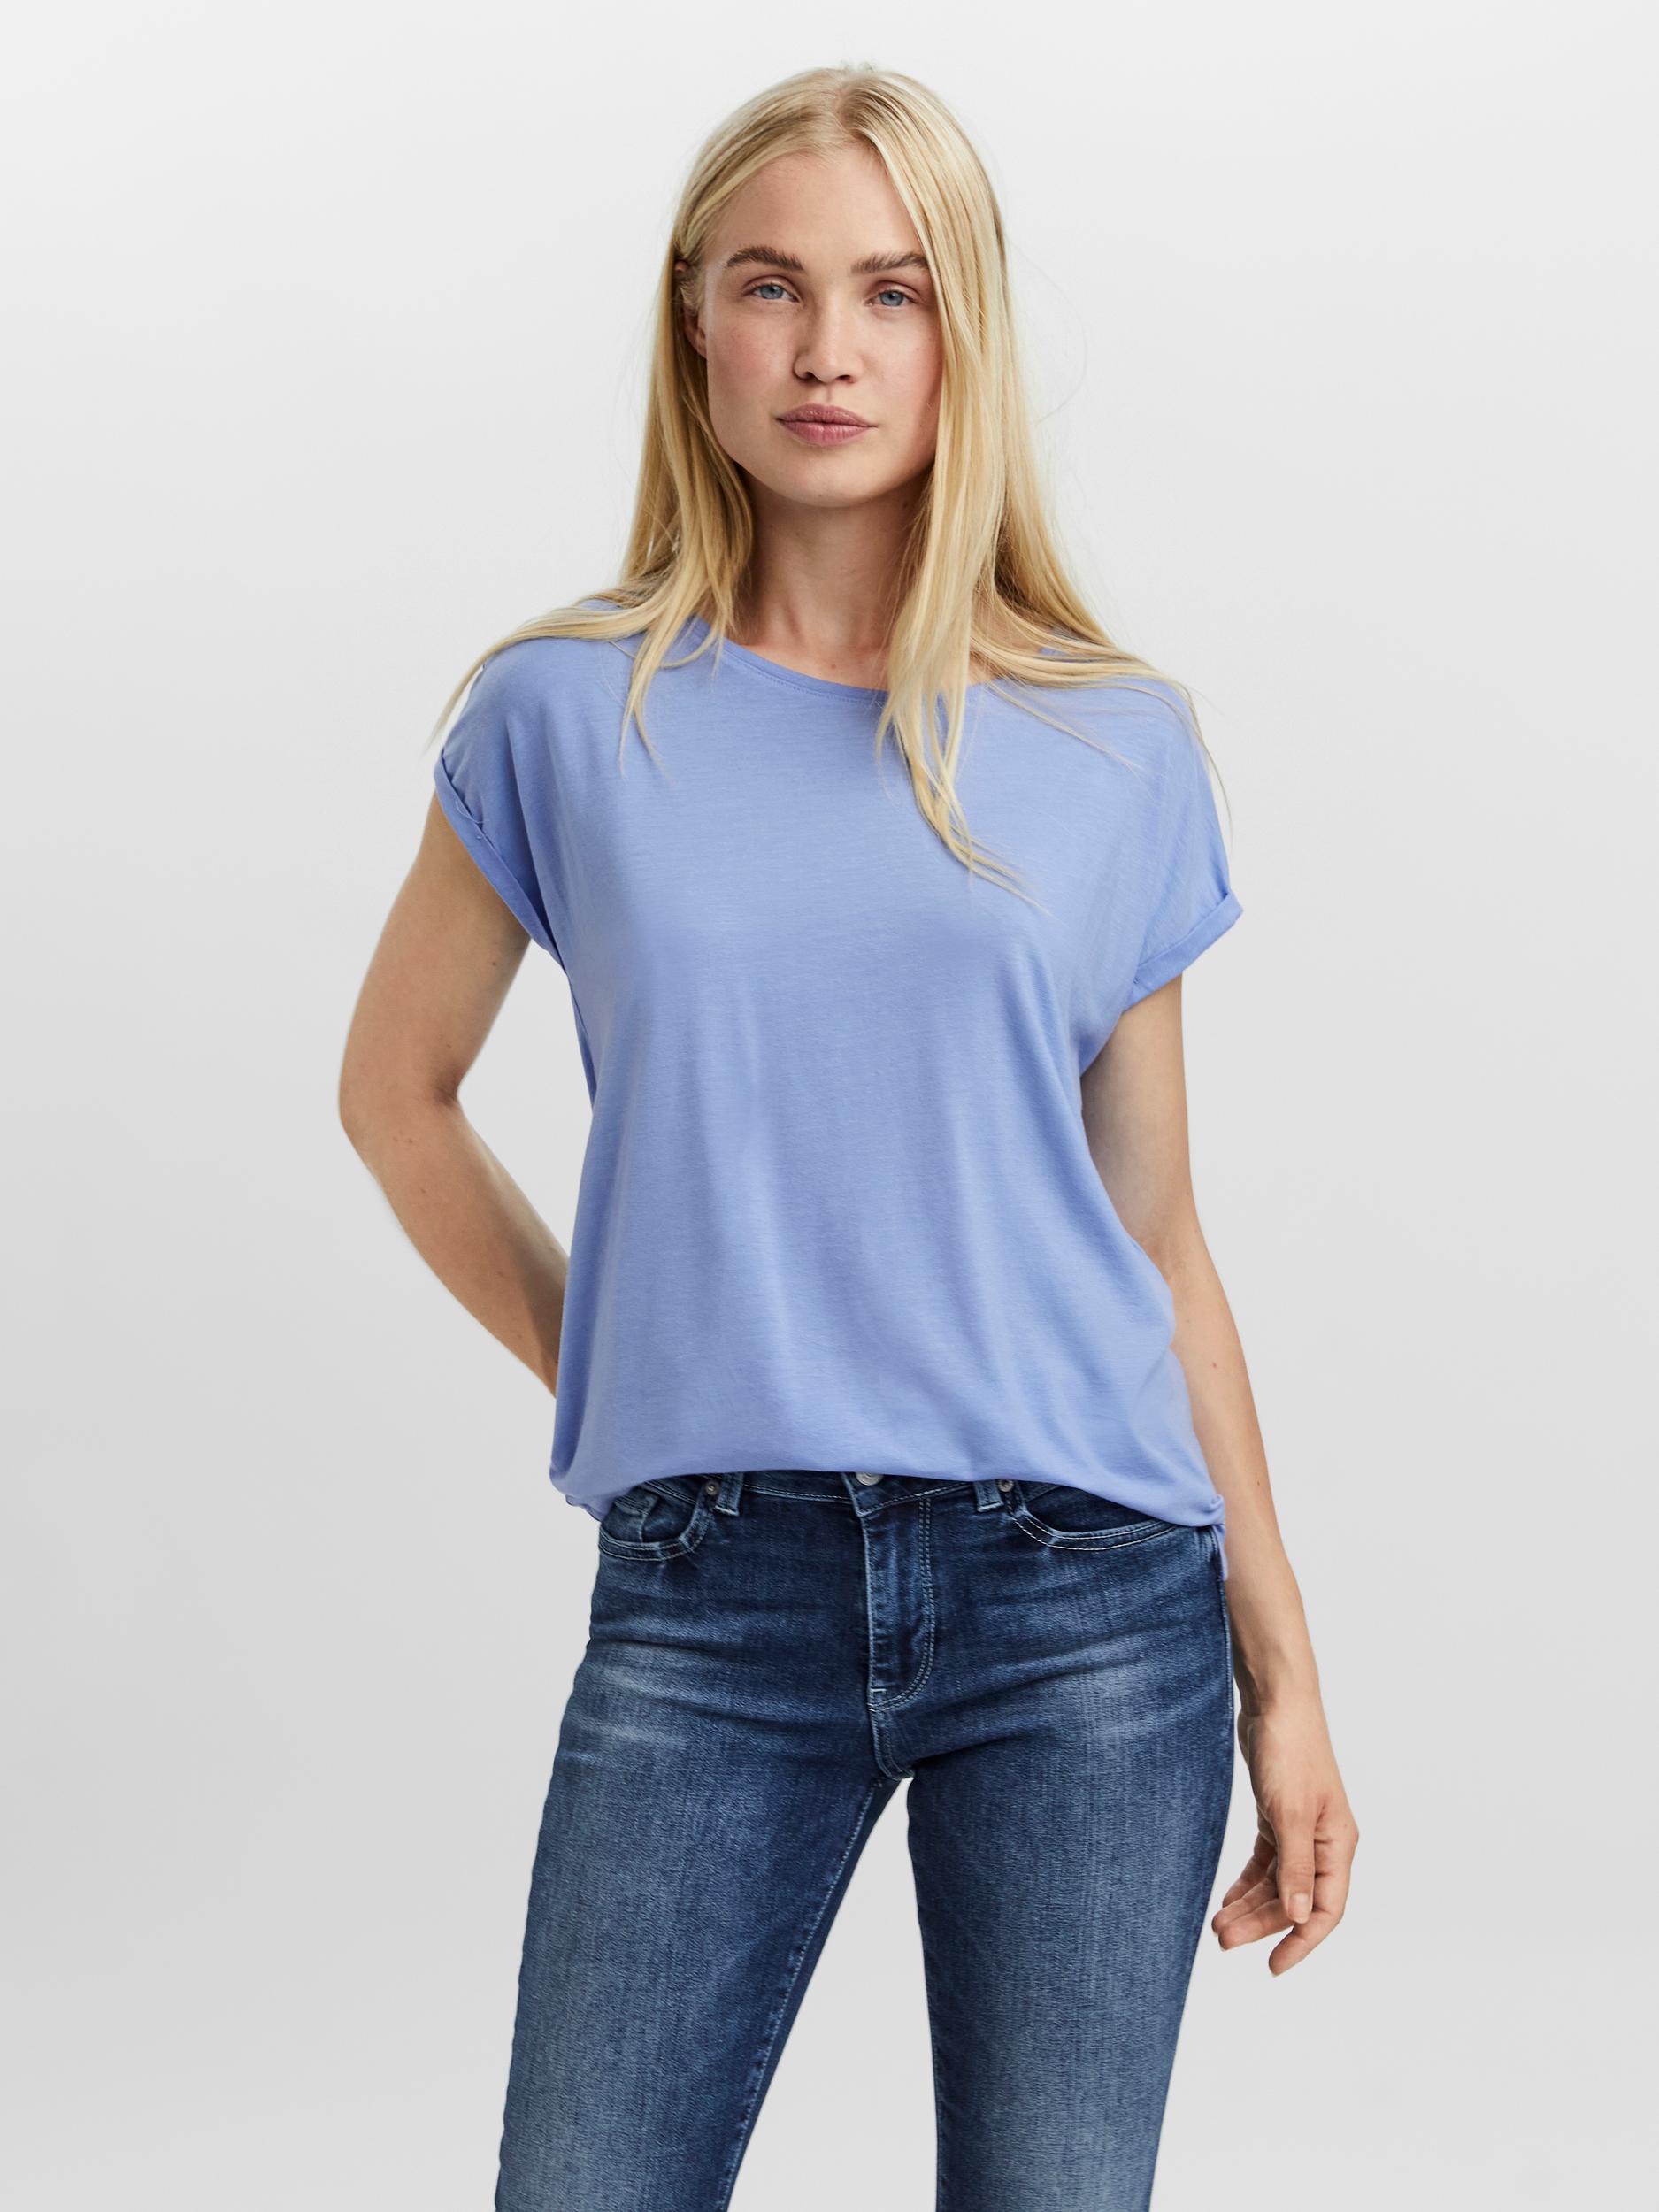 AWARE | Ava T-Shirt, GRAPEMIST, large